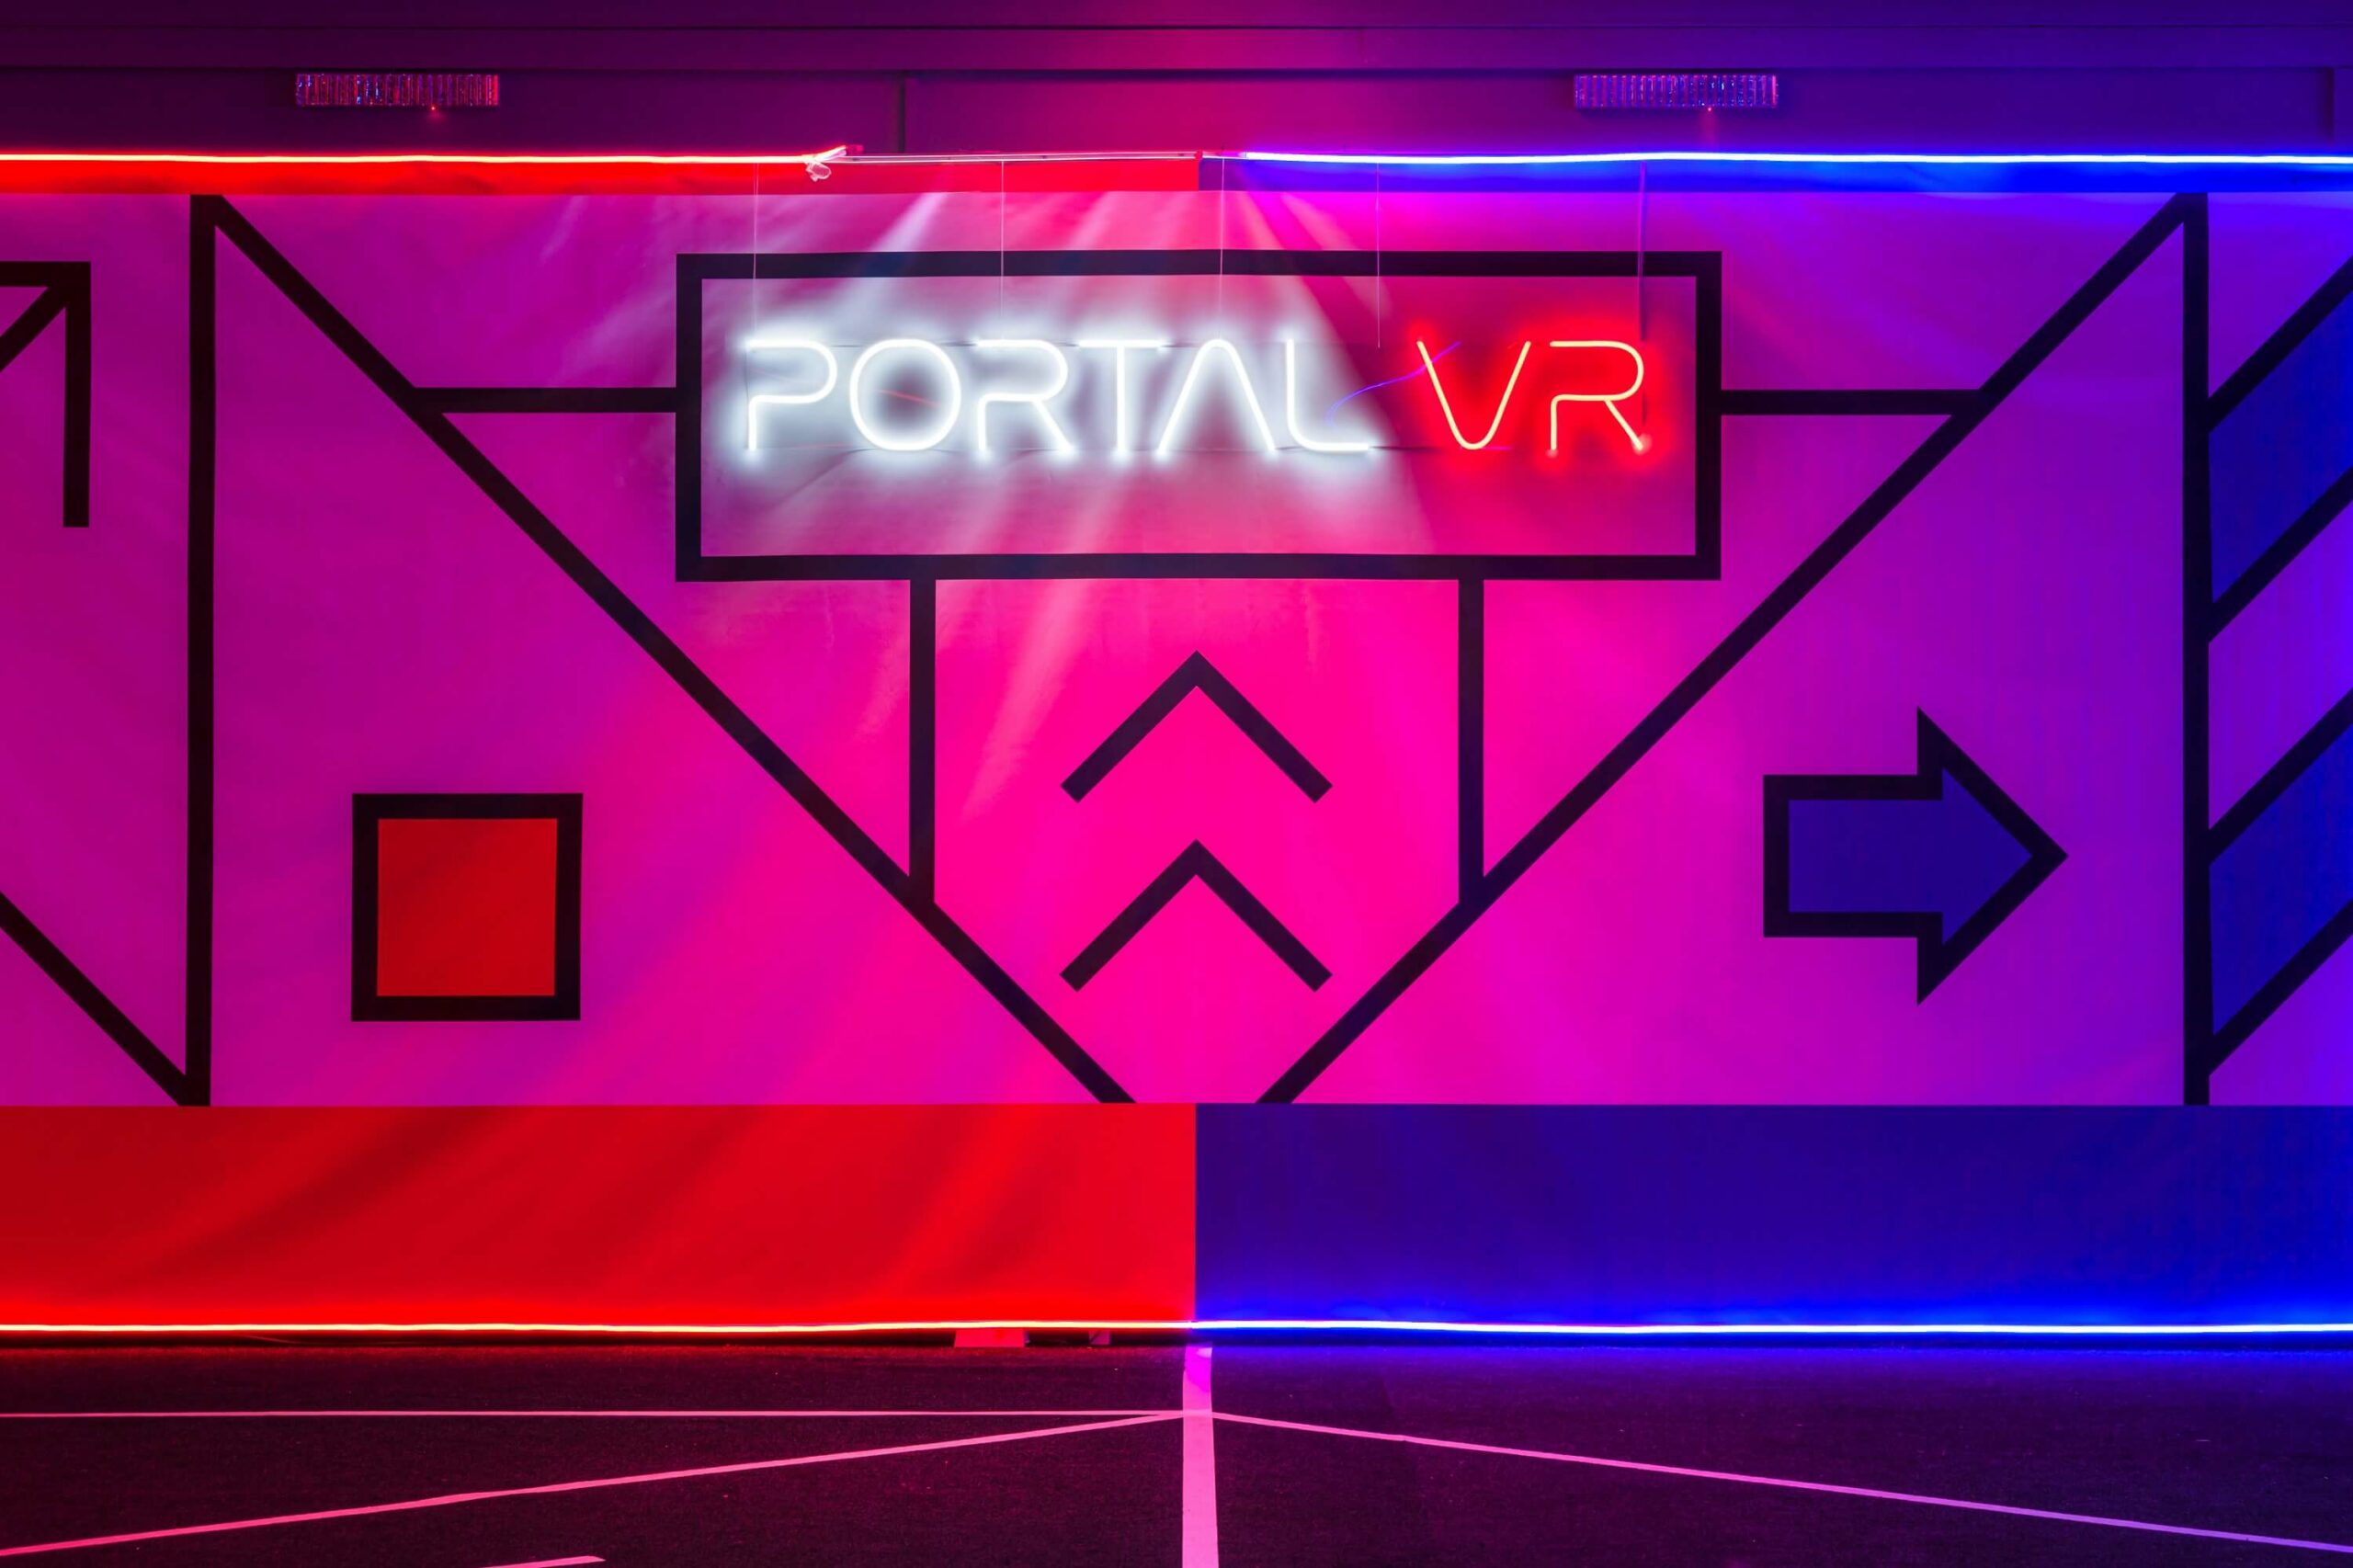 Vr портал. Портал ВР. Логотип VR портала. Portal VR Калуга. Клуб виртуальной реальности логотип.